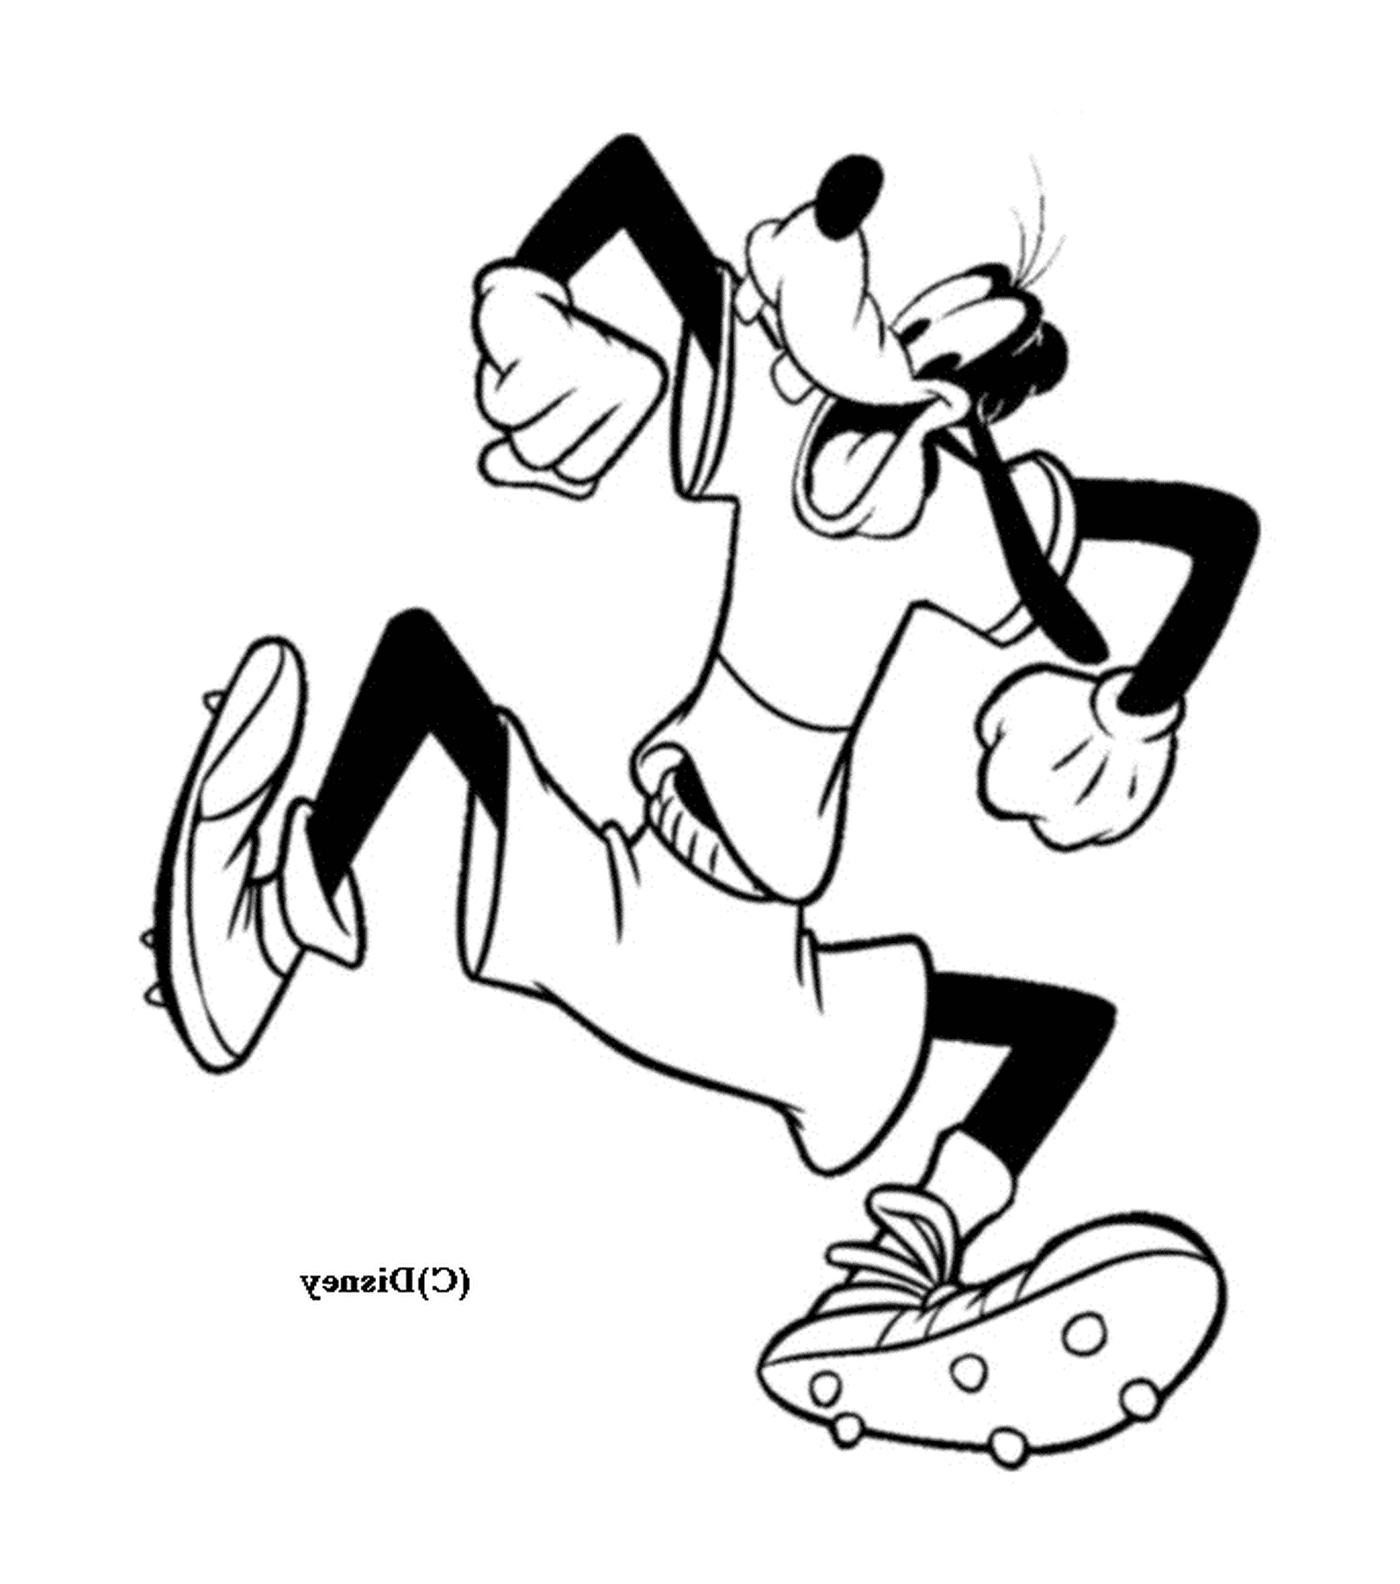  Dingo corre vestindo shorts 